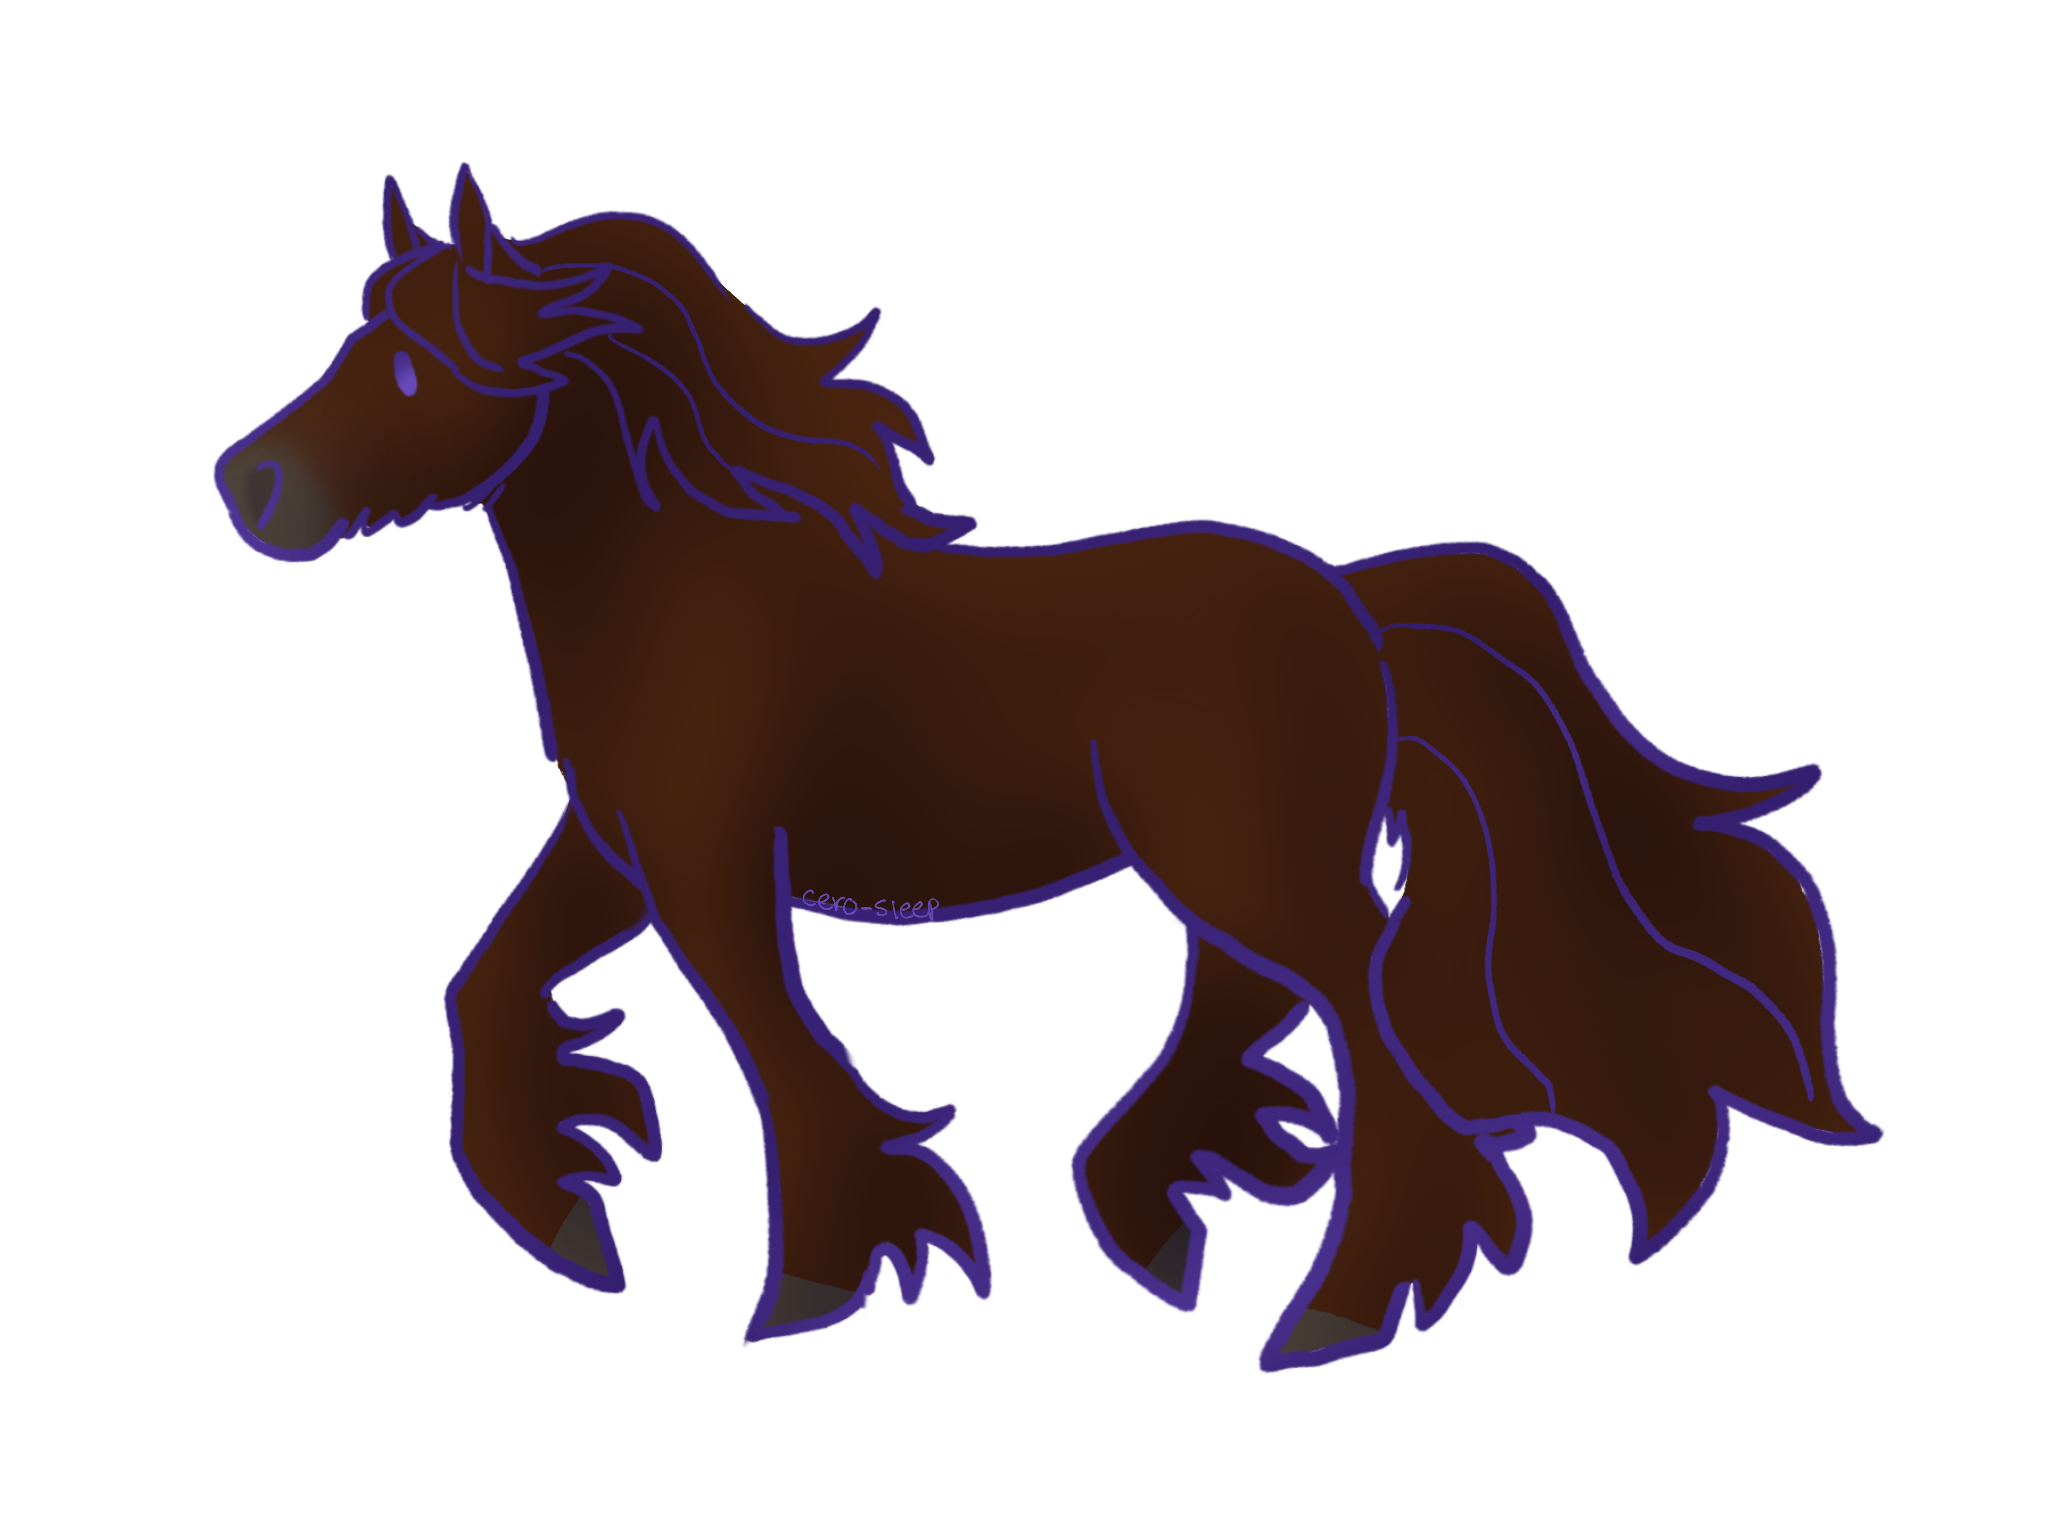 Dibujo de un caballo alazán liver trotando.